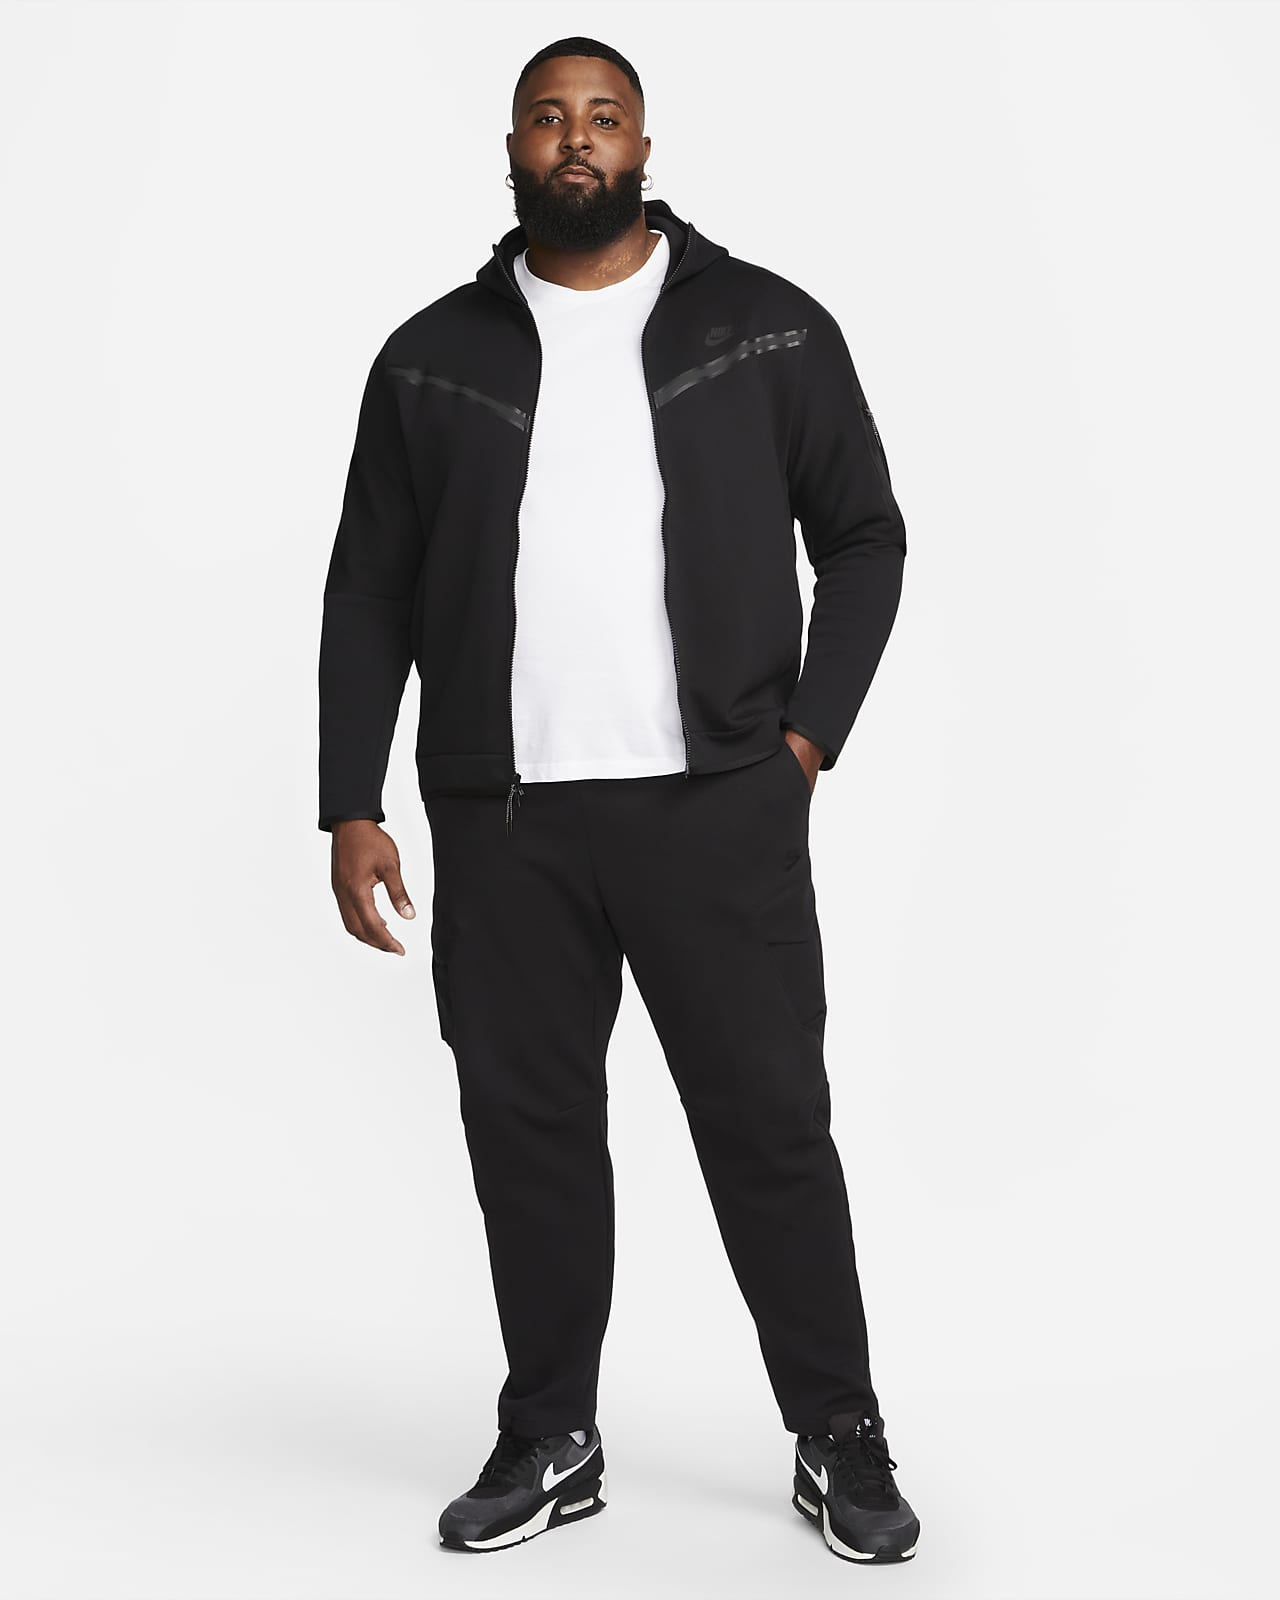 Tech Fleece Hoodies  Pullovers Nikecom